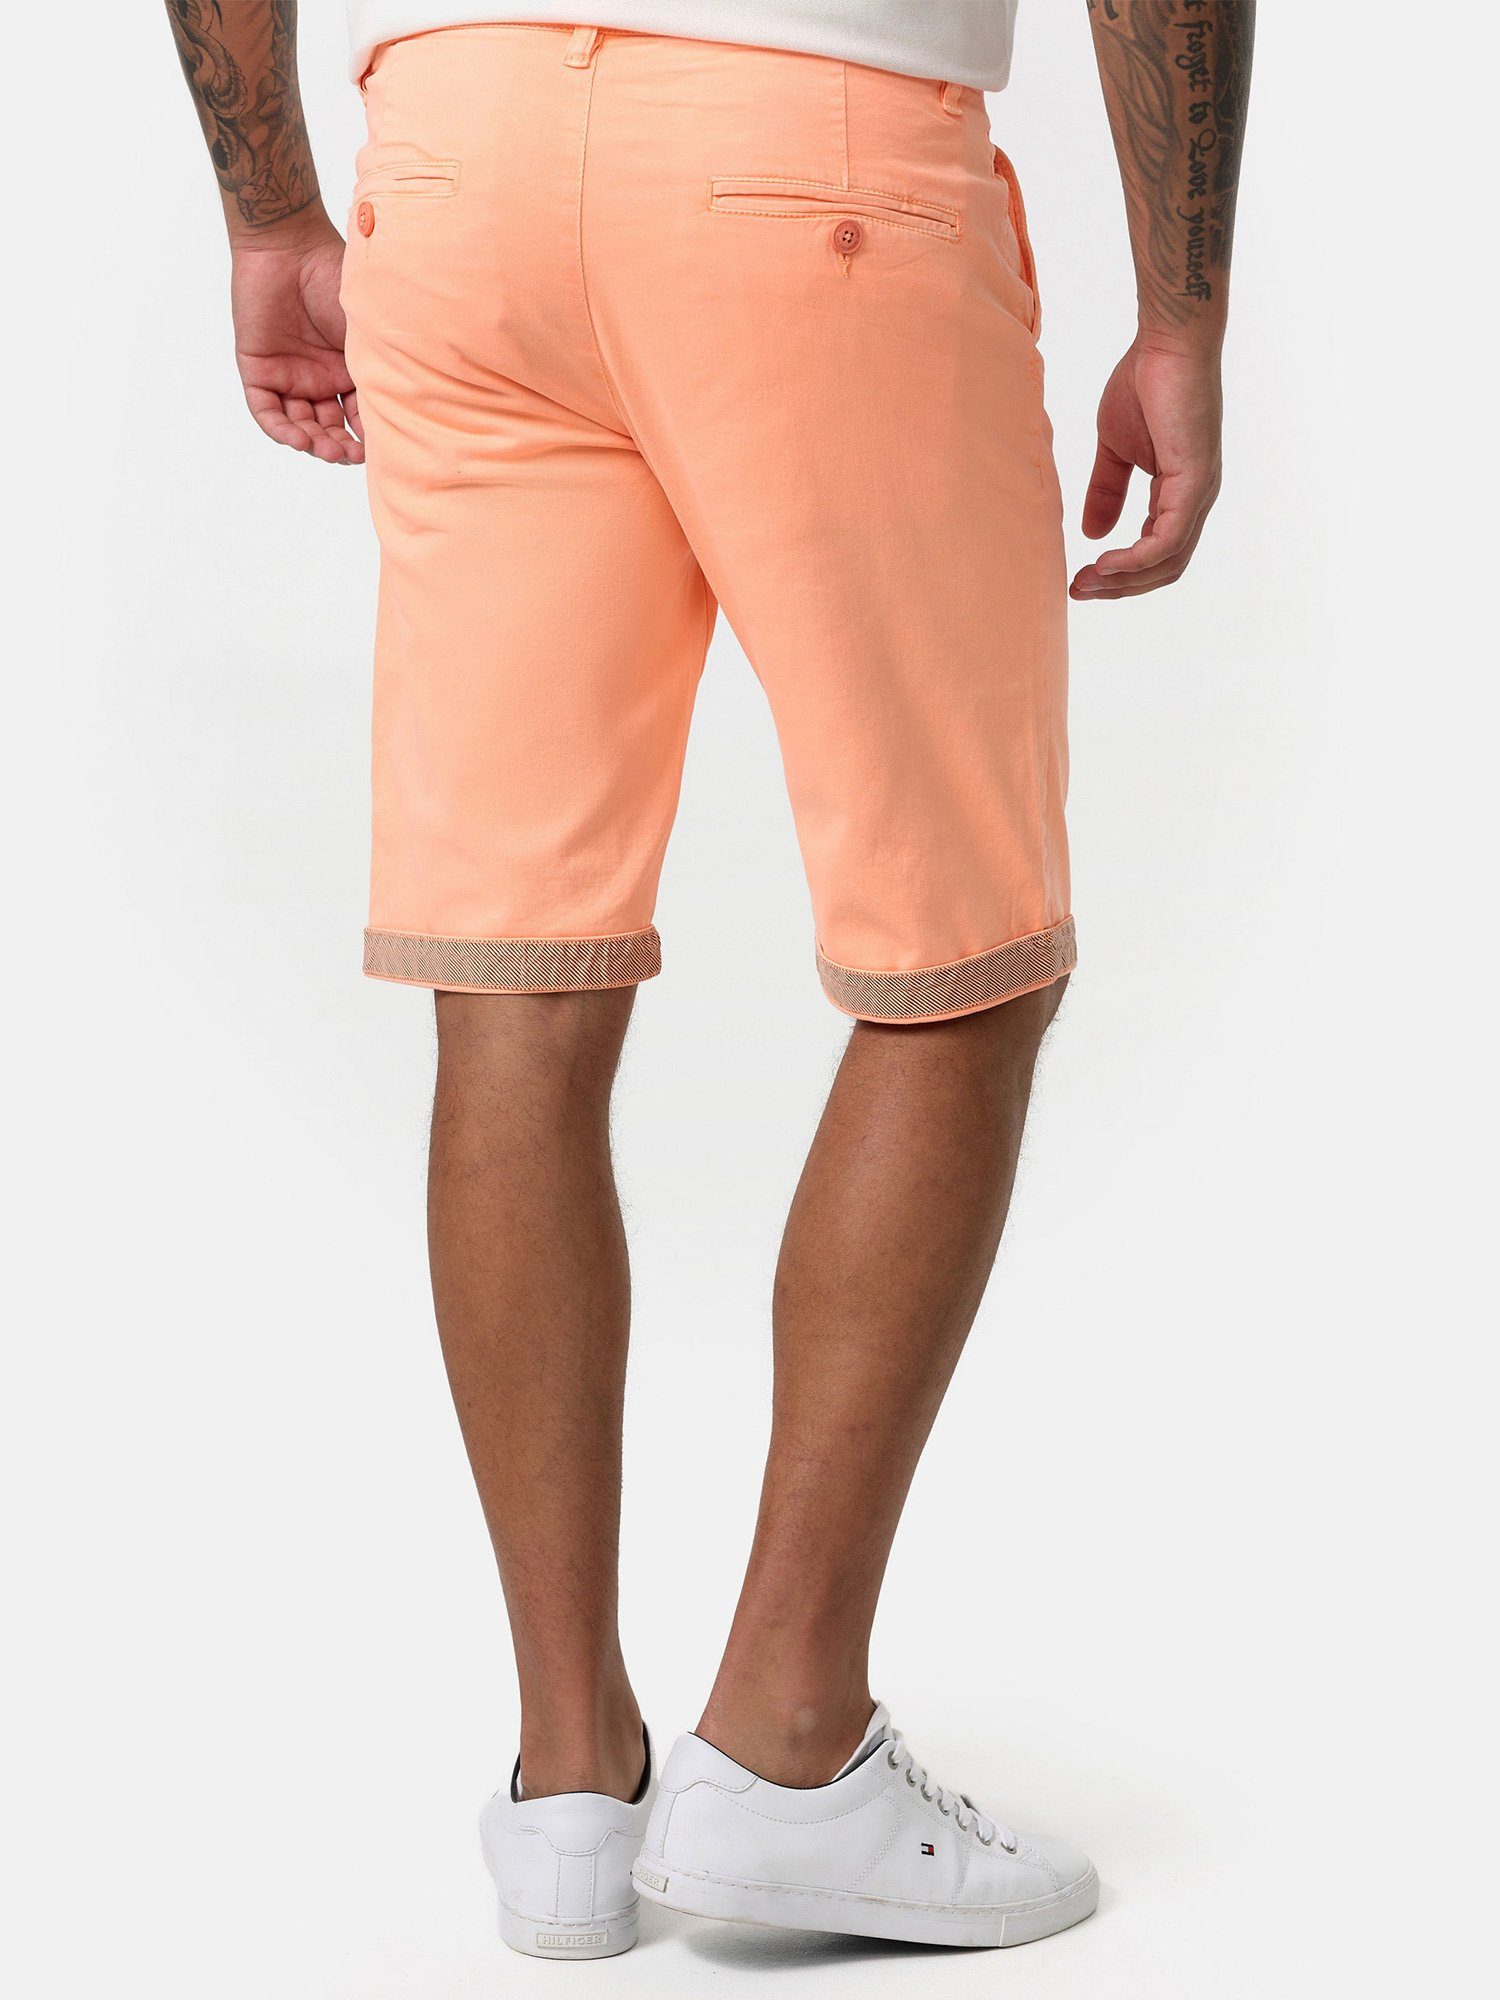 Shorts Chinoshorts Hose Tazzio Orange A206 Chino